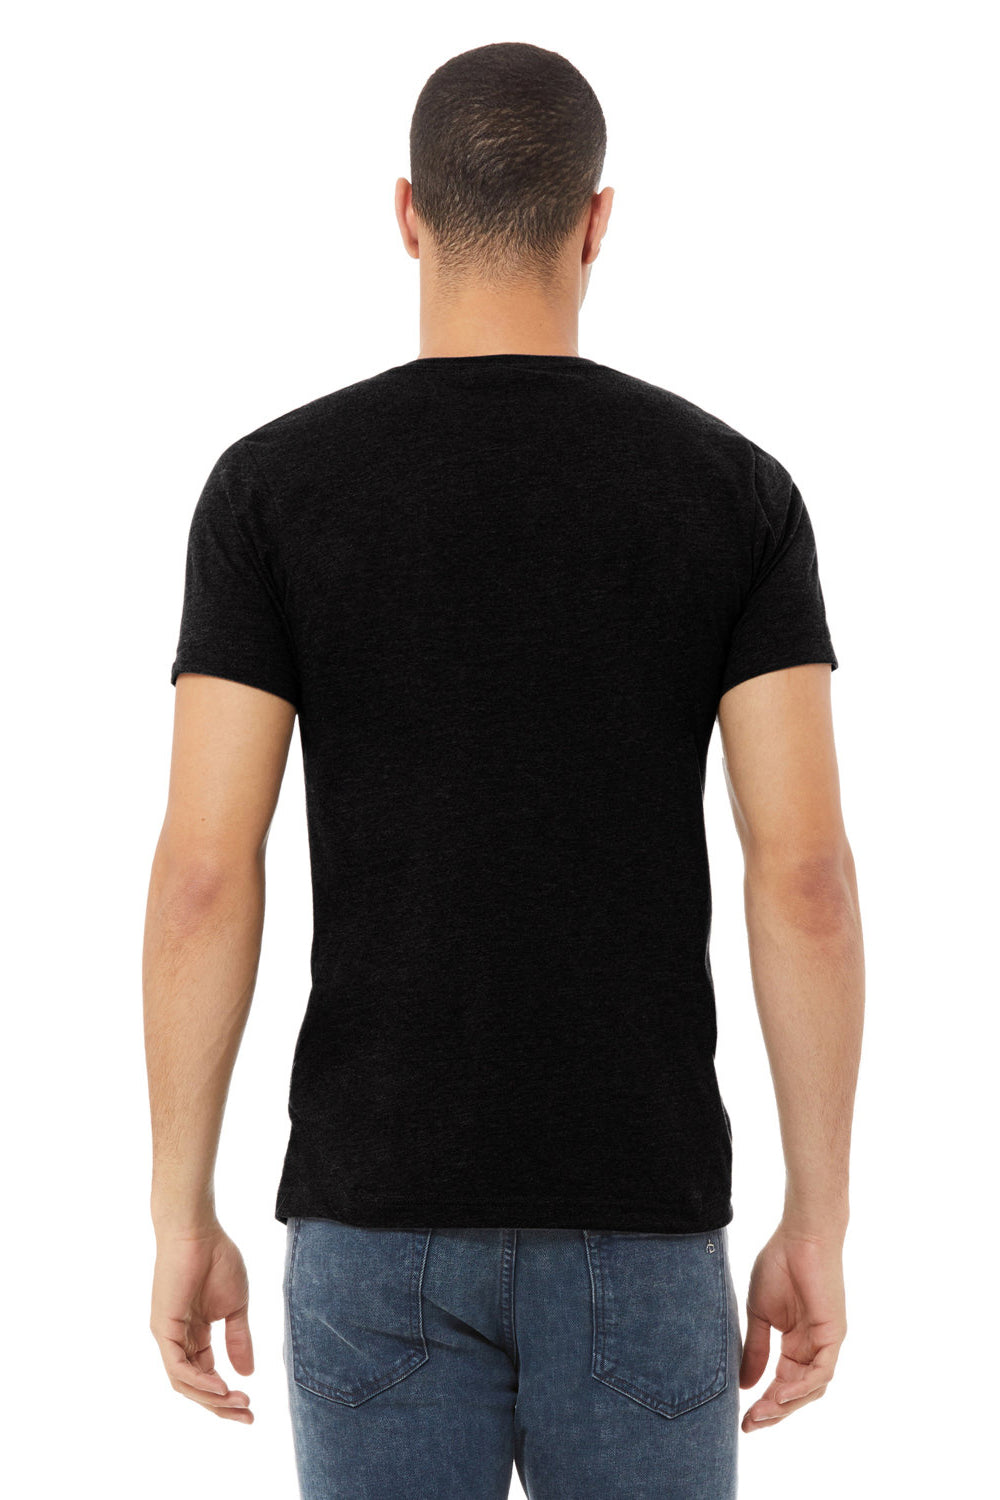 Bella + Canvas BC3005CVC Mens CVC Short Sleeve V-Neck T-Shirt Solid Black Model Back